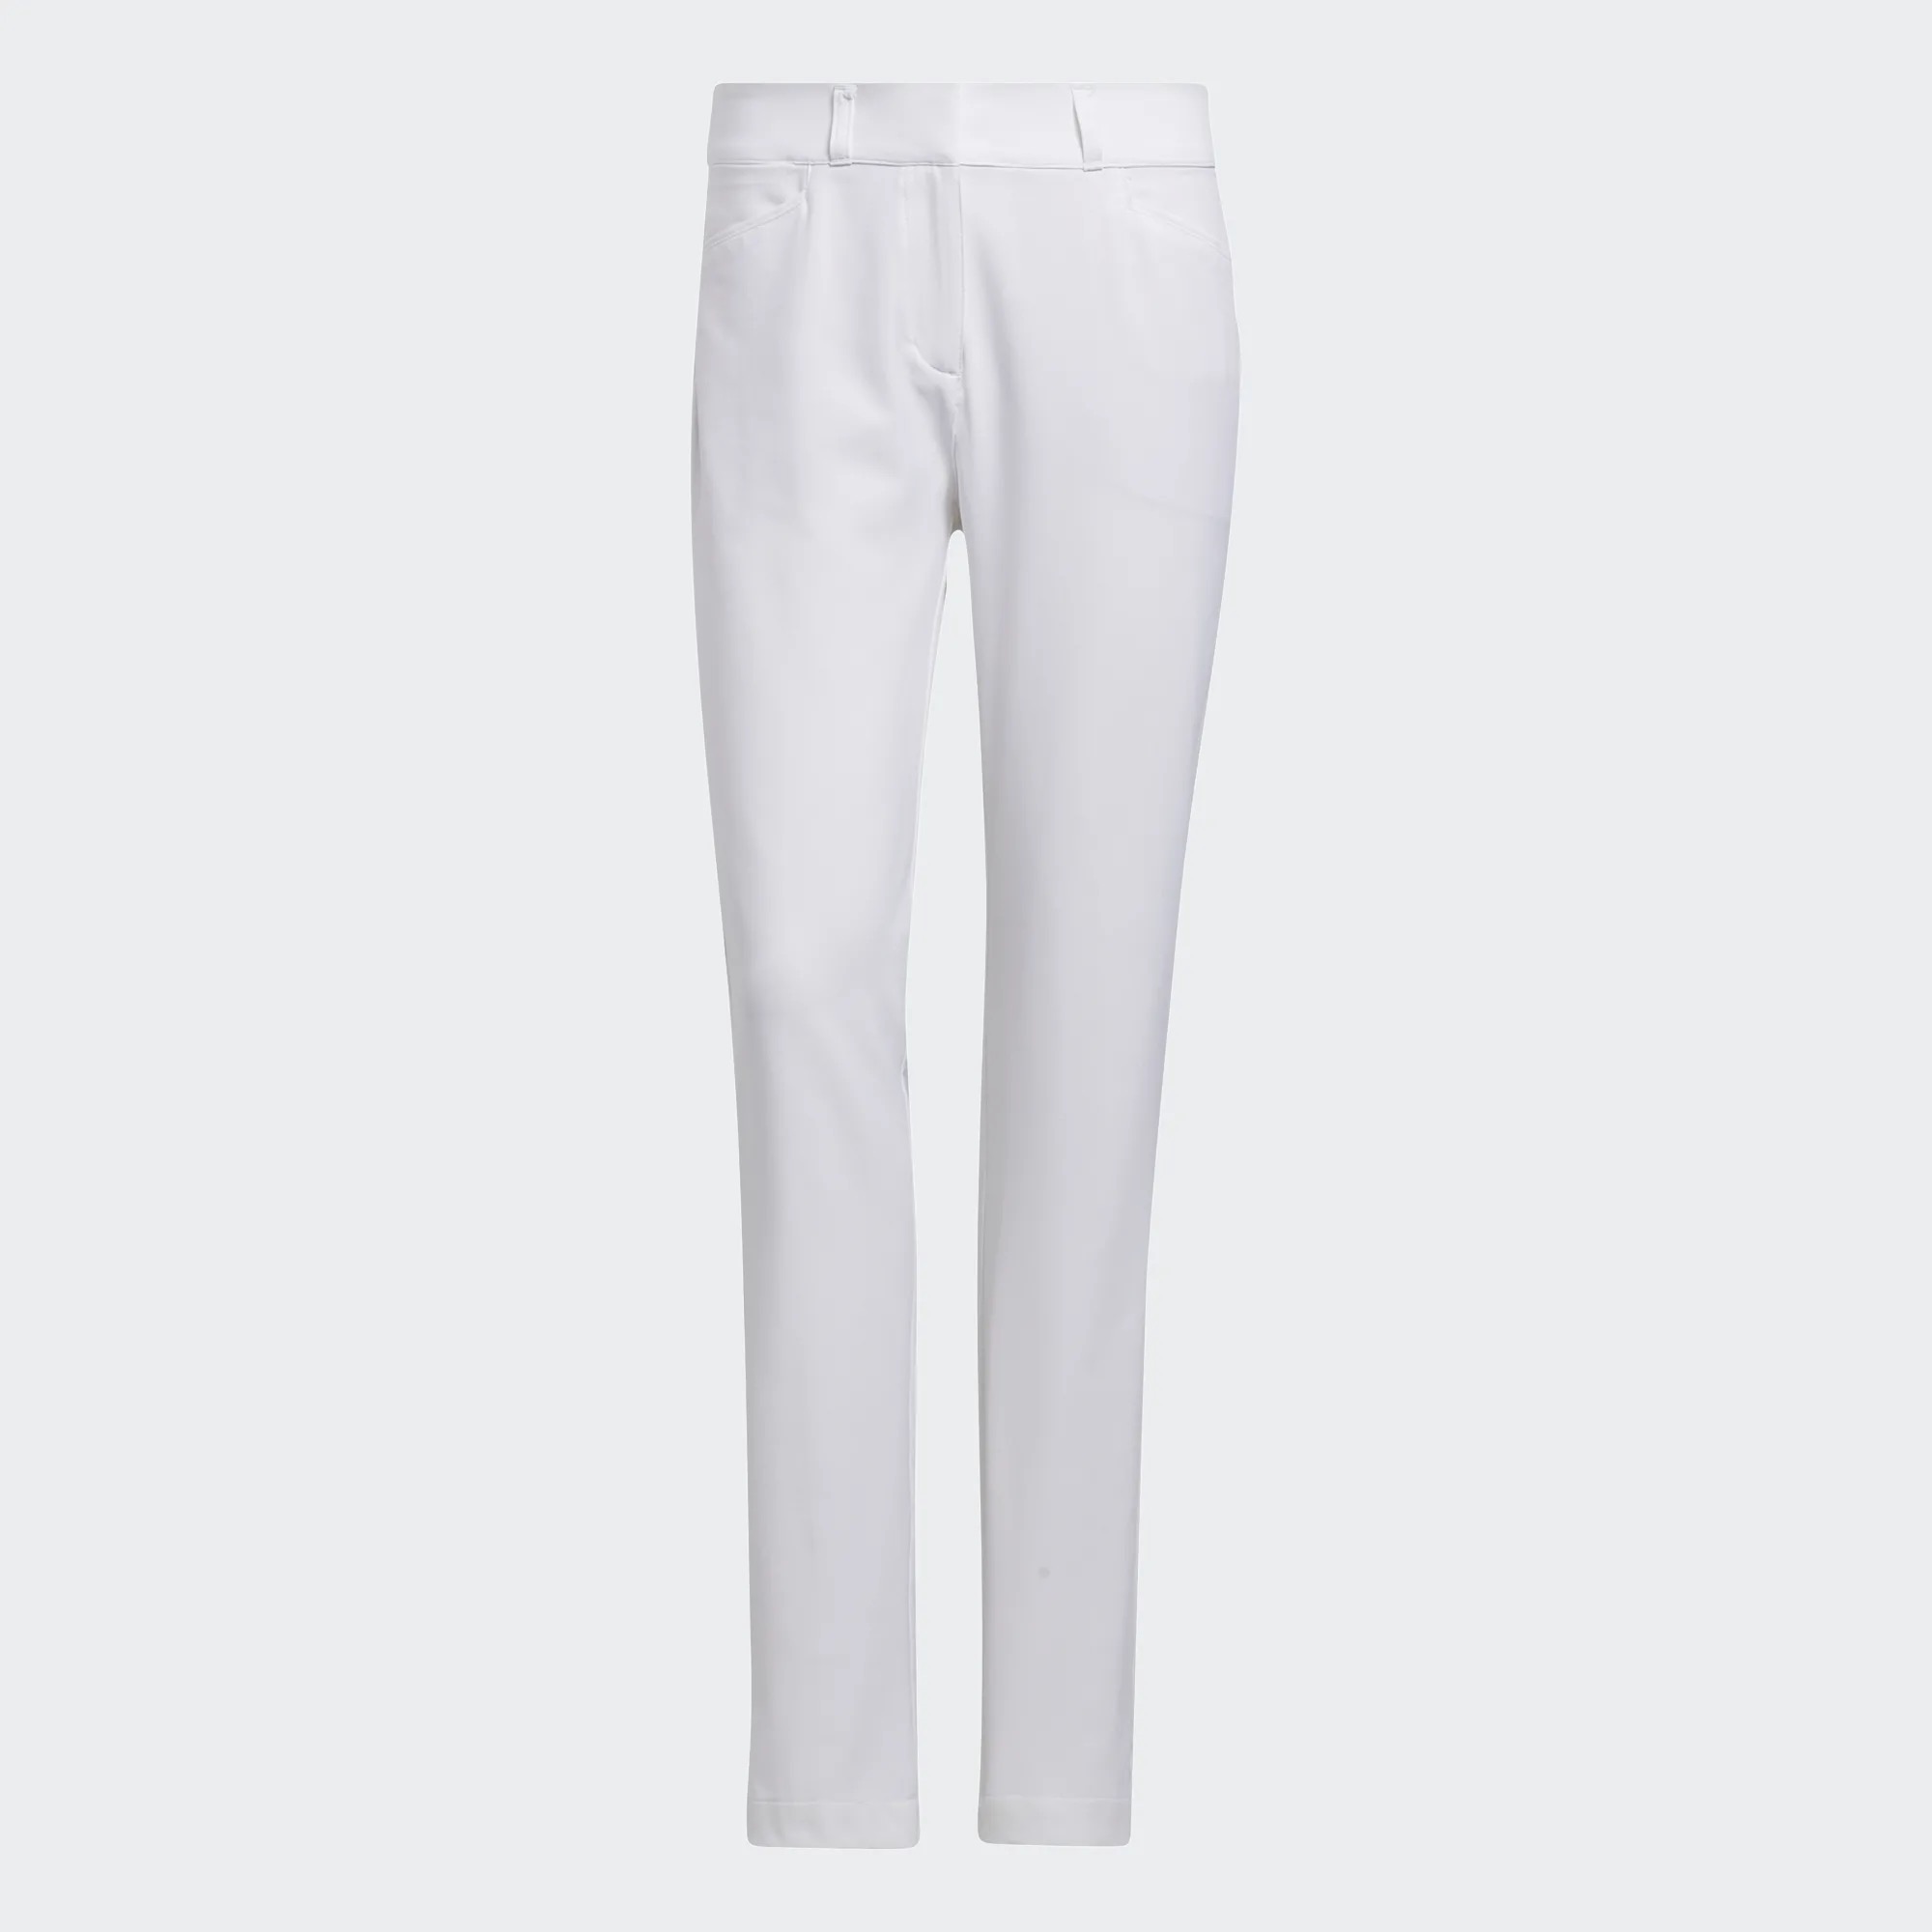 Adidas Full Length Pant White